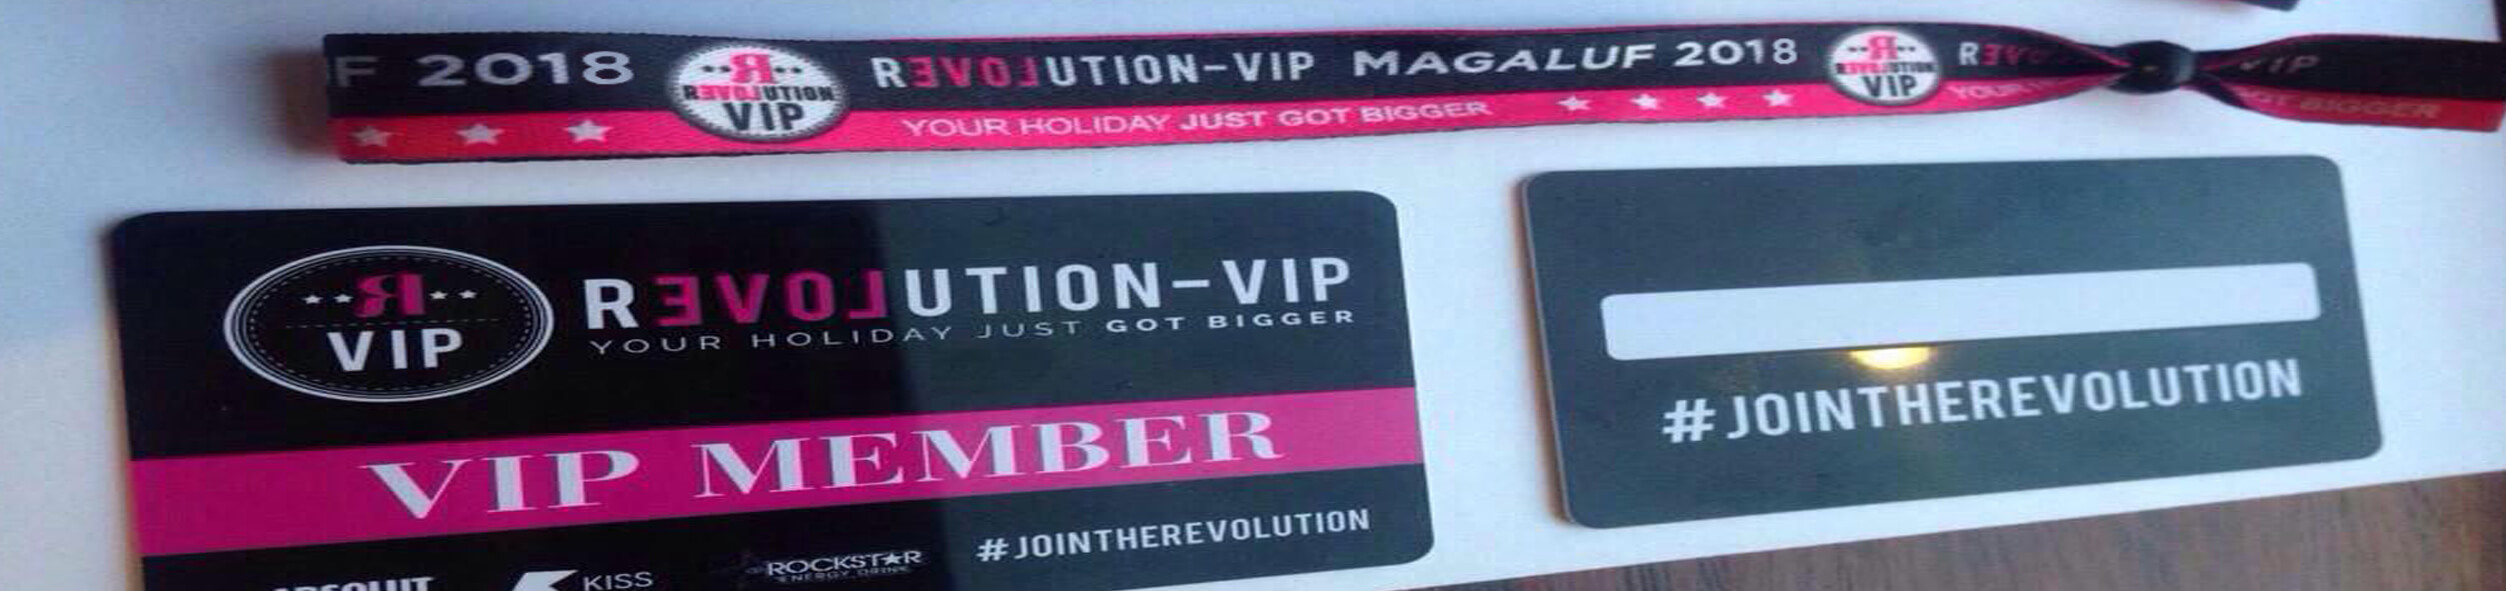 Revolution VIP wristband and card